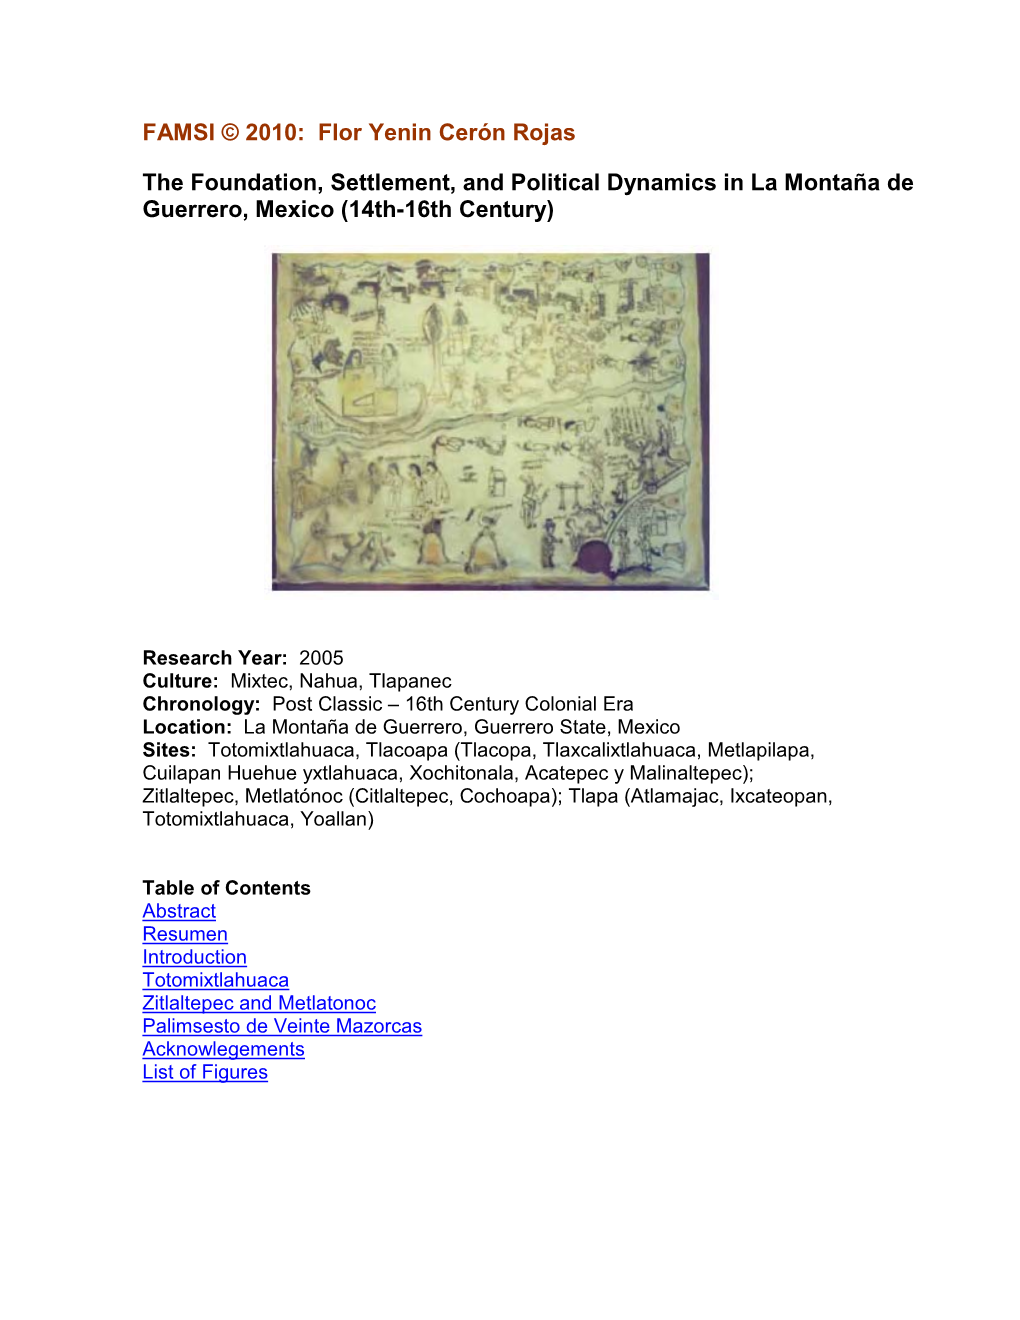 The Foundation, Settlement, and Political Dynamics in La Montaña De Guerrero, Mexico (14Th-16Th Century)